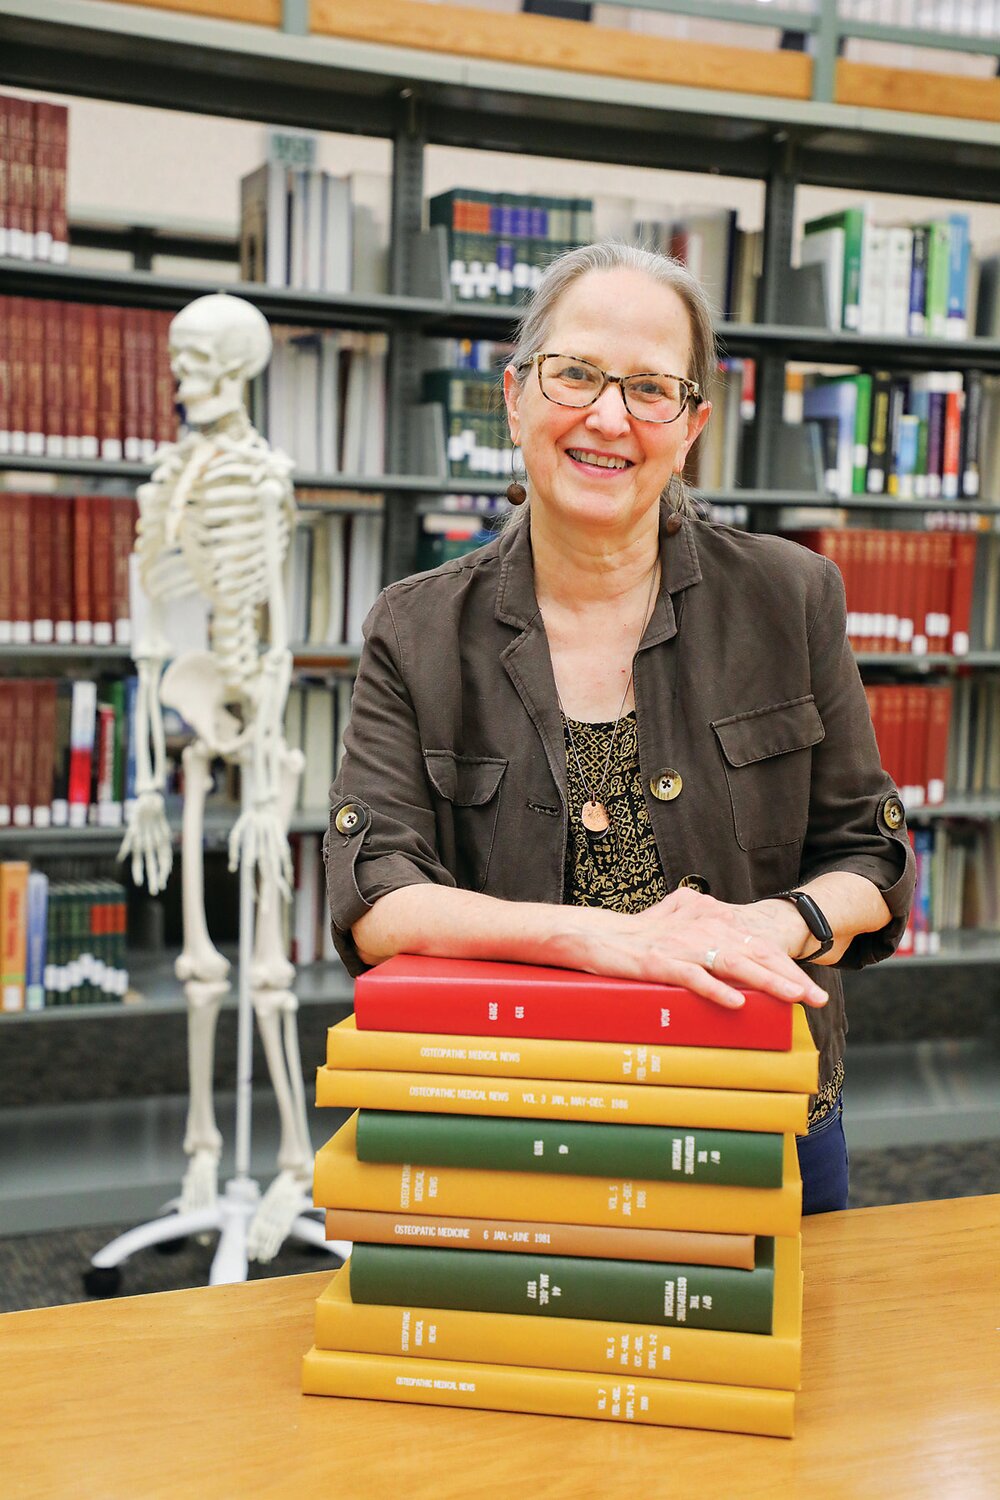 Dr. Melinda Ratini